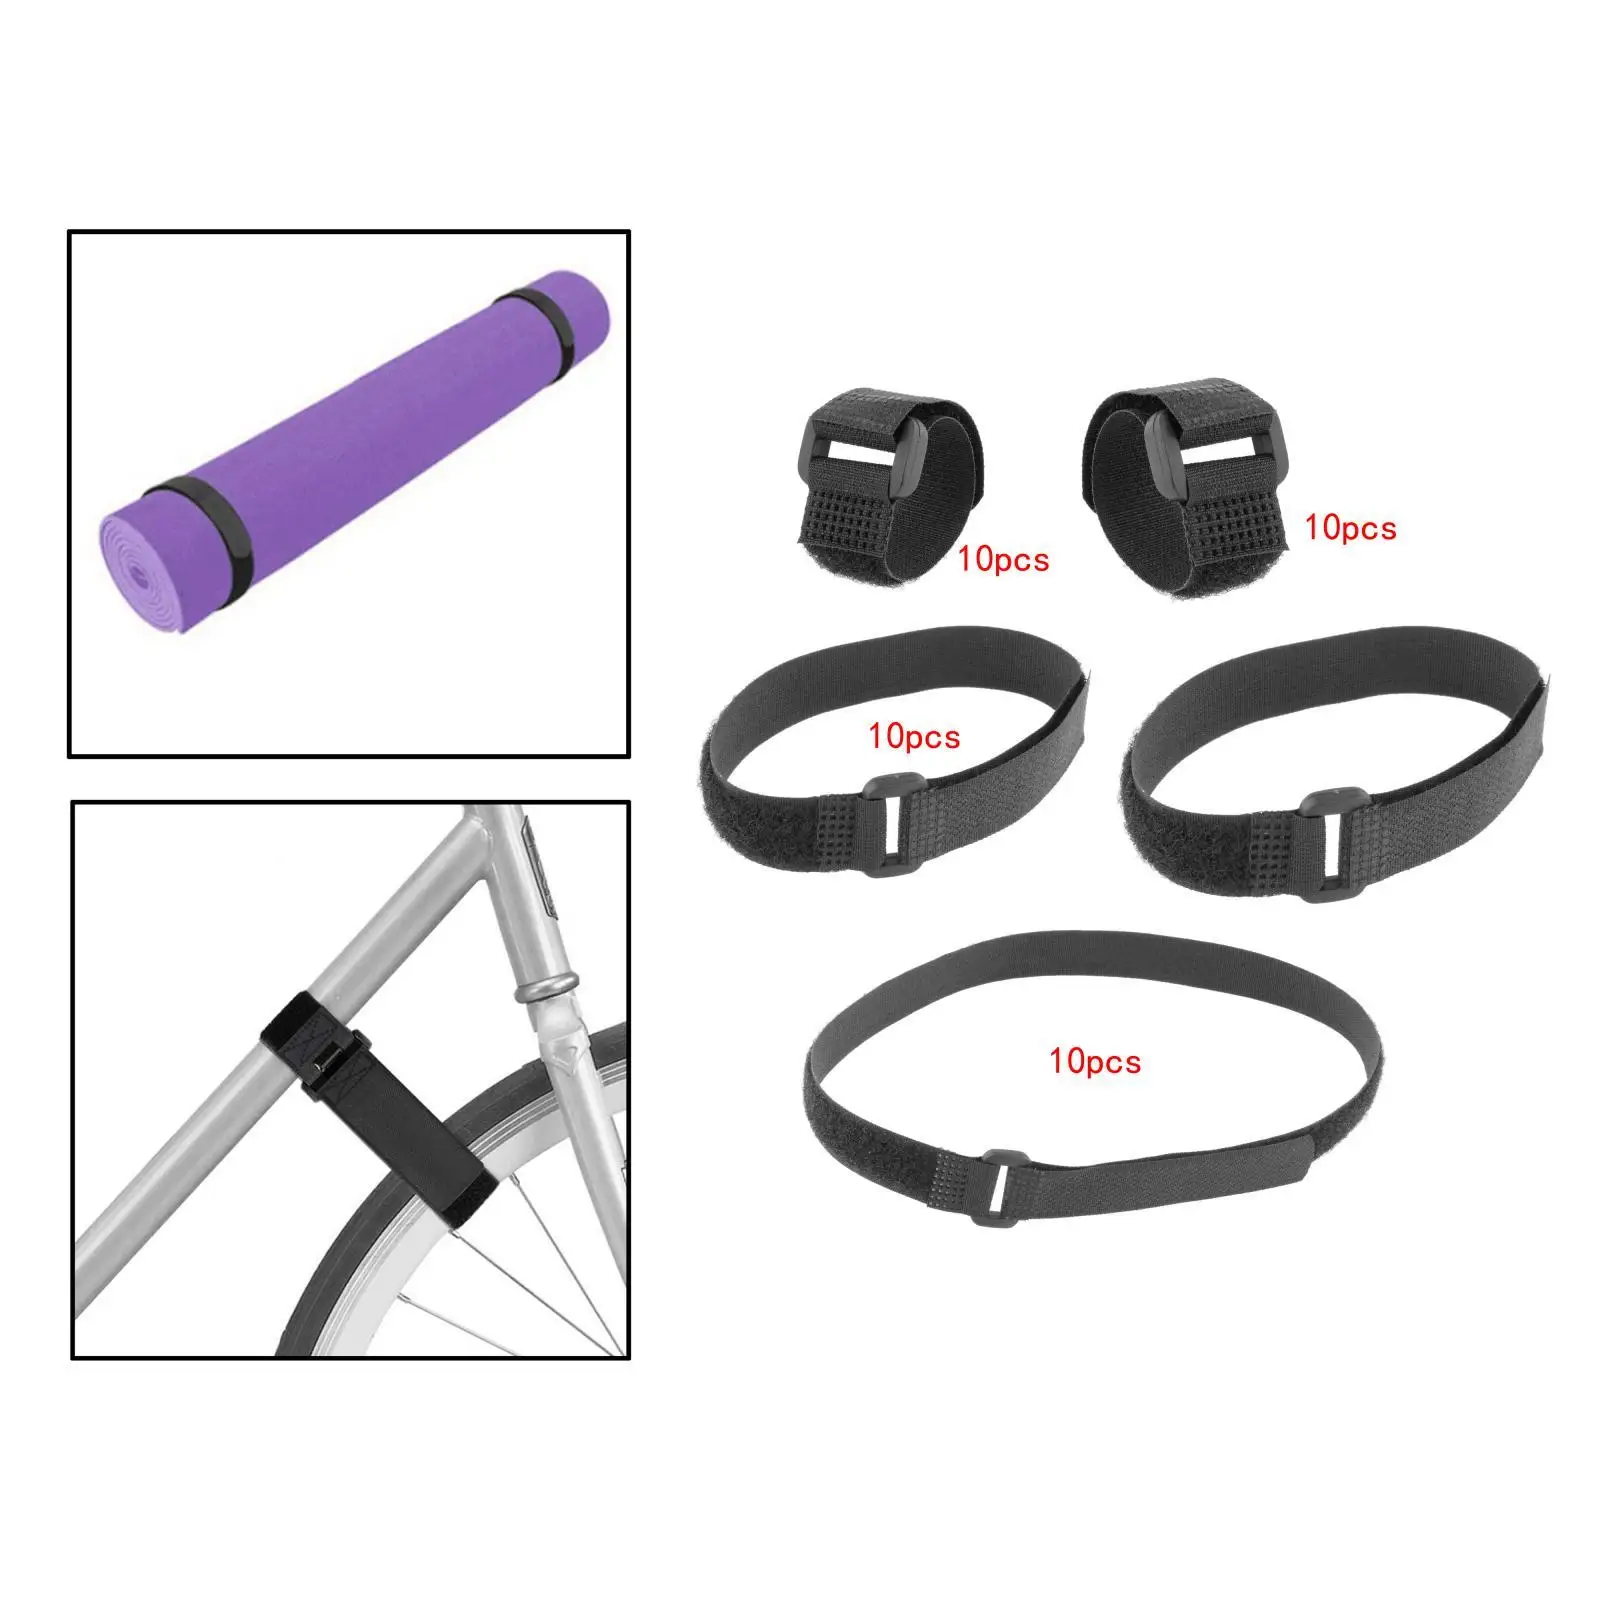  Bike Wheel Stabilizer Straps  Yoga  Lashing Grip Adjustable Stronger  Nylon Reusable tie Belts